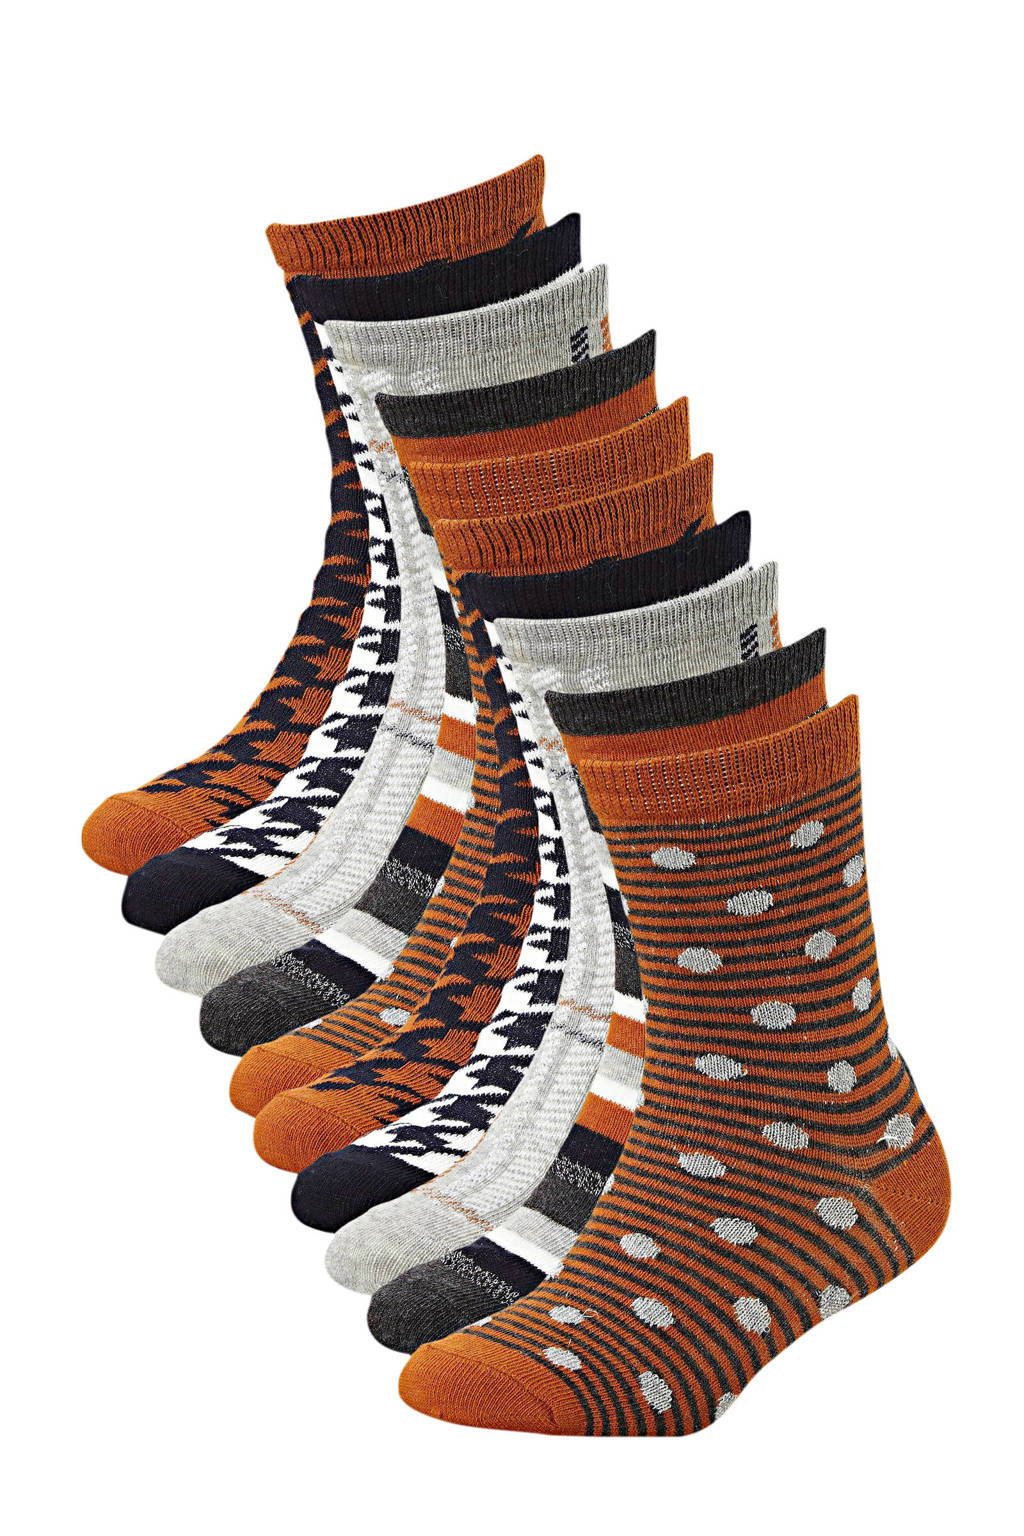 Apollo sokken - set van 10 oranje, Oranje/lichtgrijs/antraciet/zwart